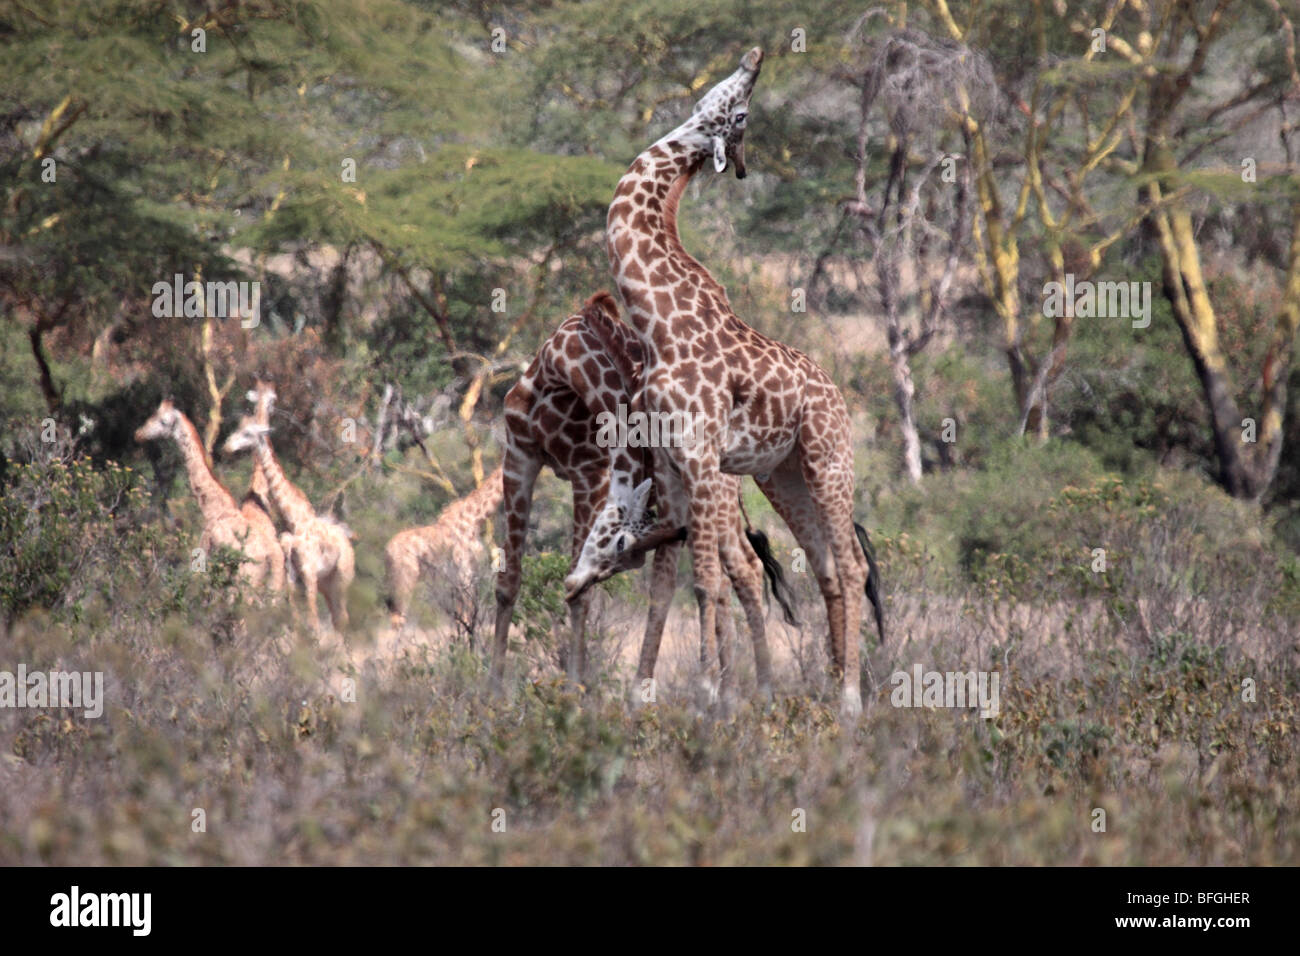 Rothschild's giraffes Stock Photo